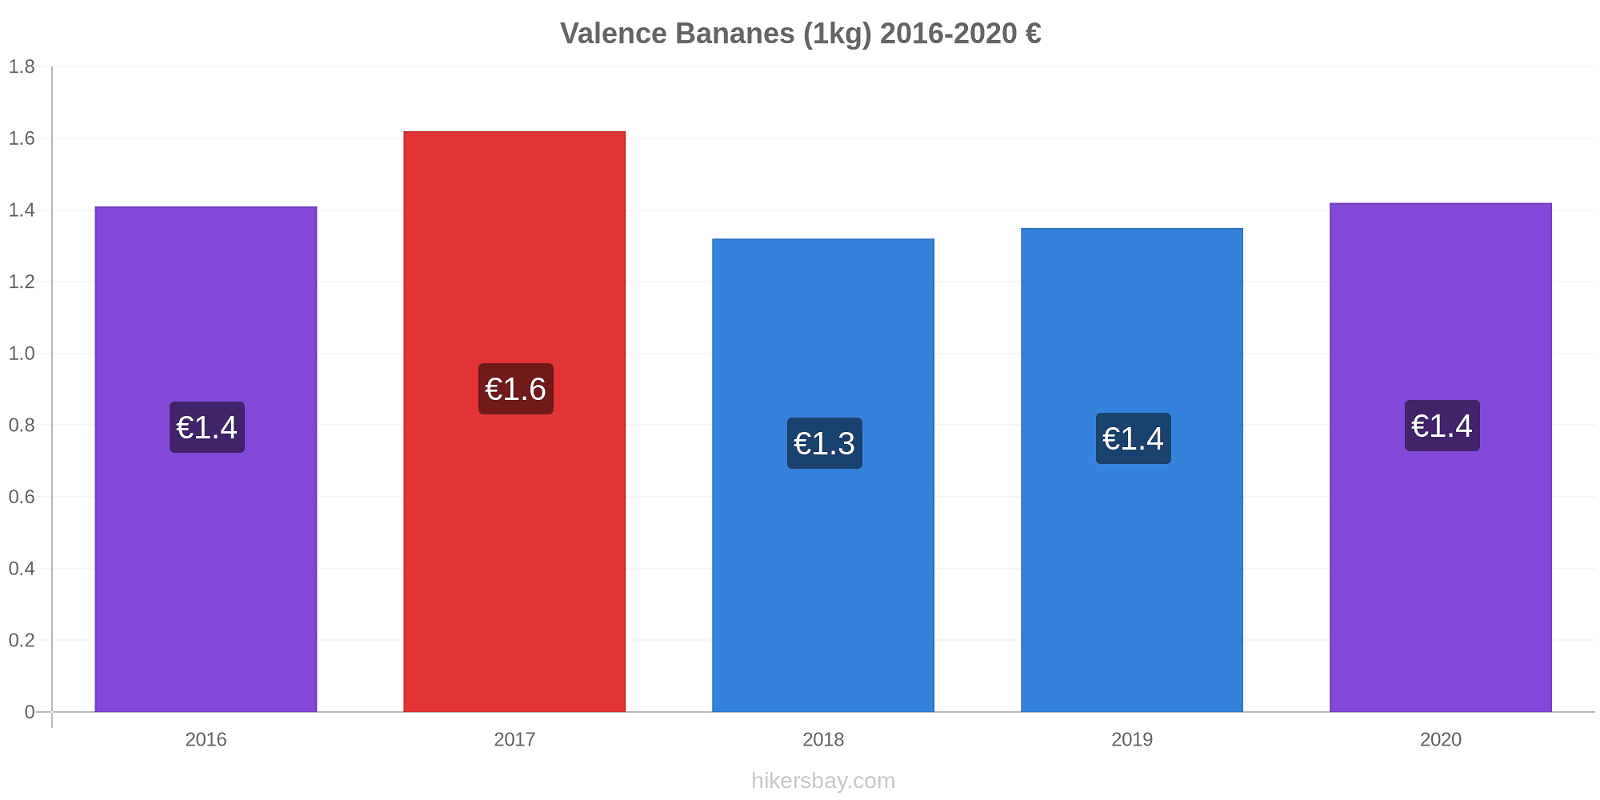 Valence changements de prix Bananes (1kg) hikersbay.com